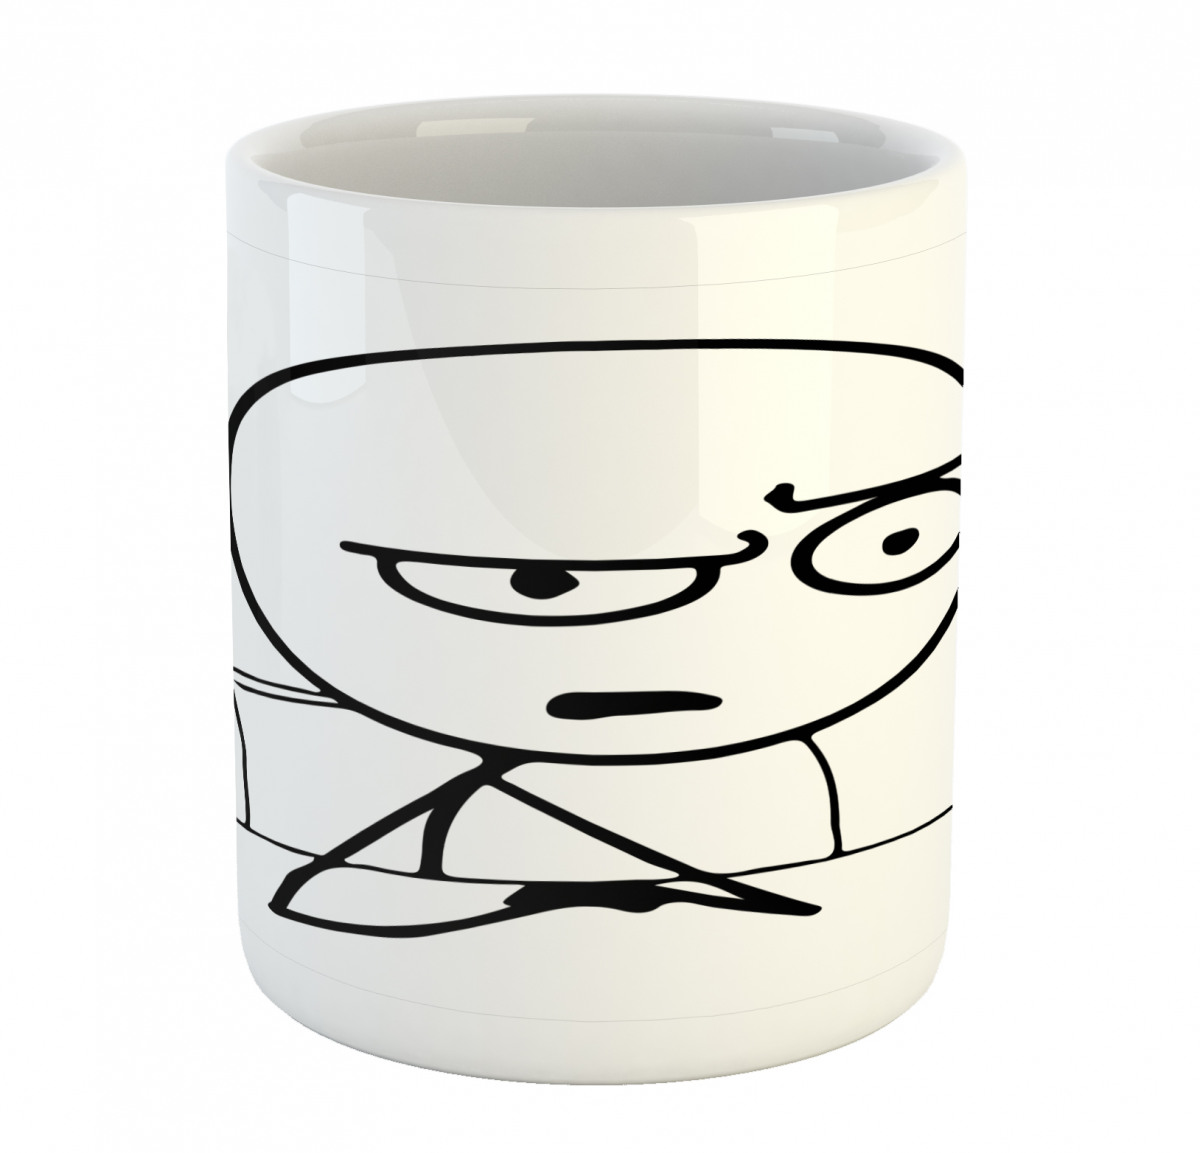 Roblox Man Face Meme Mug Funny Mug Gift Idea for Kids or 